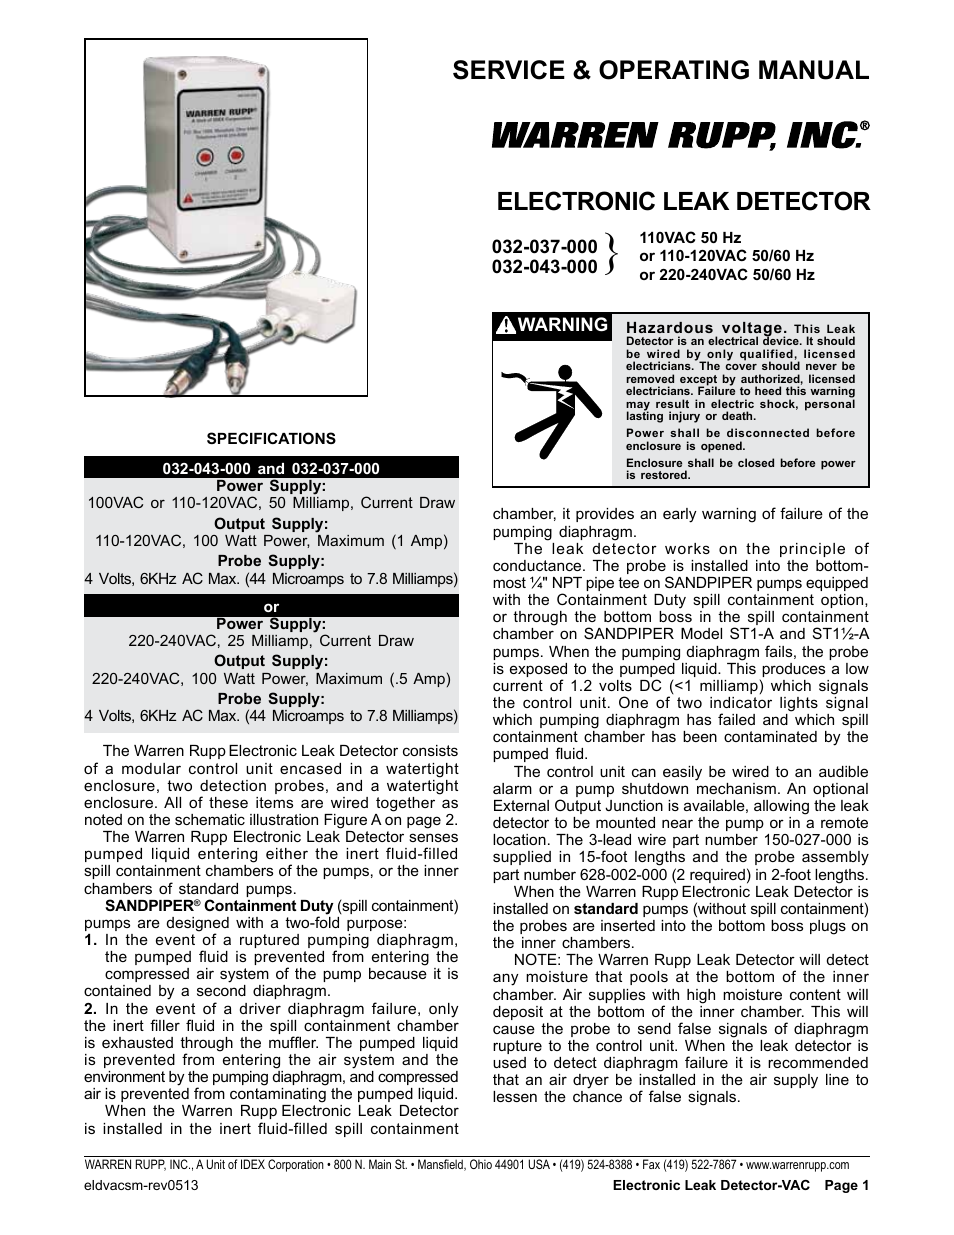 ELECTRONIC LEAK DETECTOR 032-037-000, 032-043-000